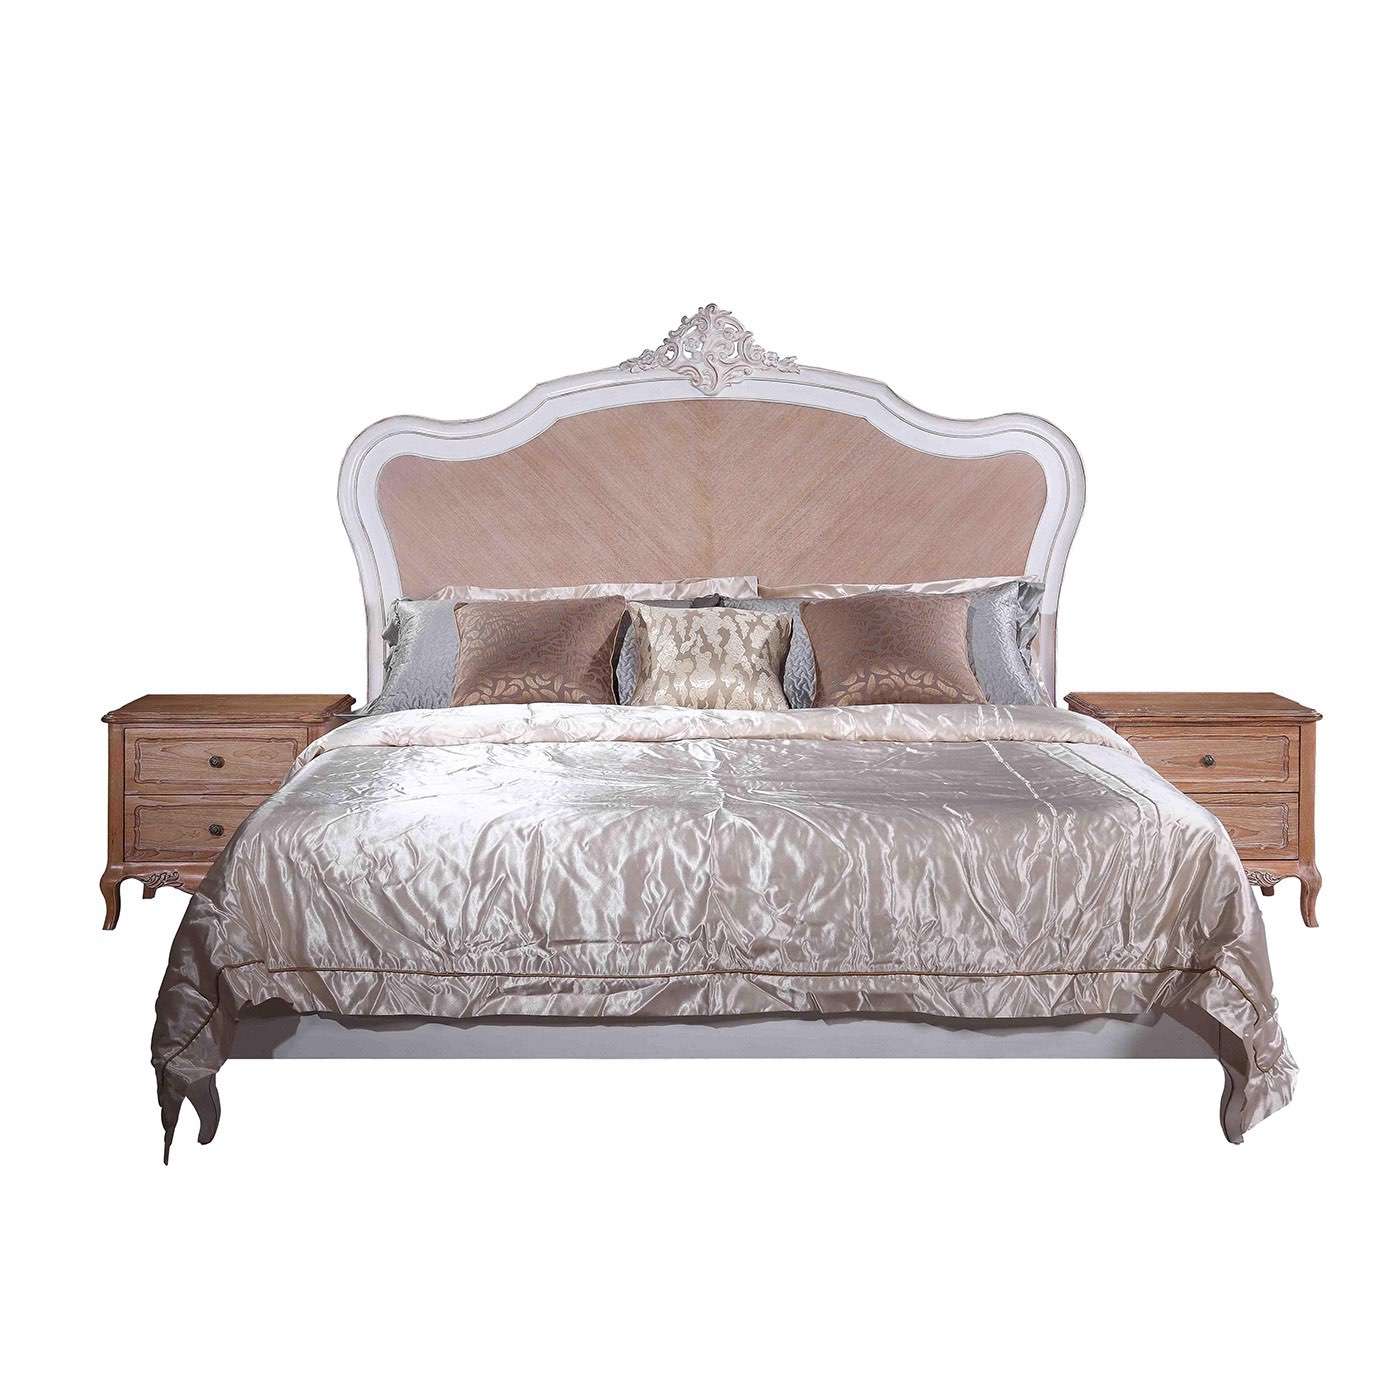 bedroom furniture|wood Headboard|solid wood bed